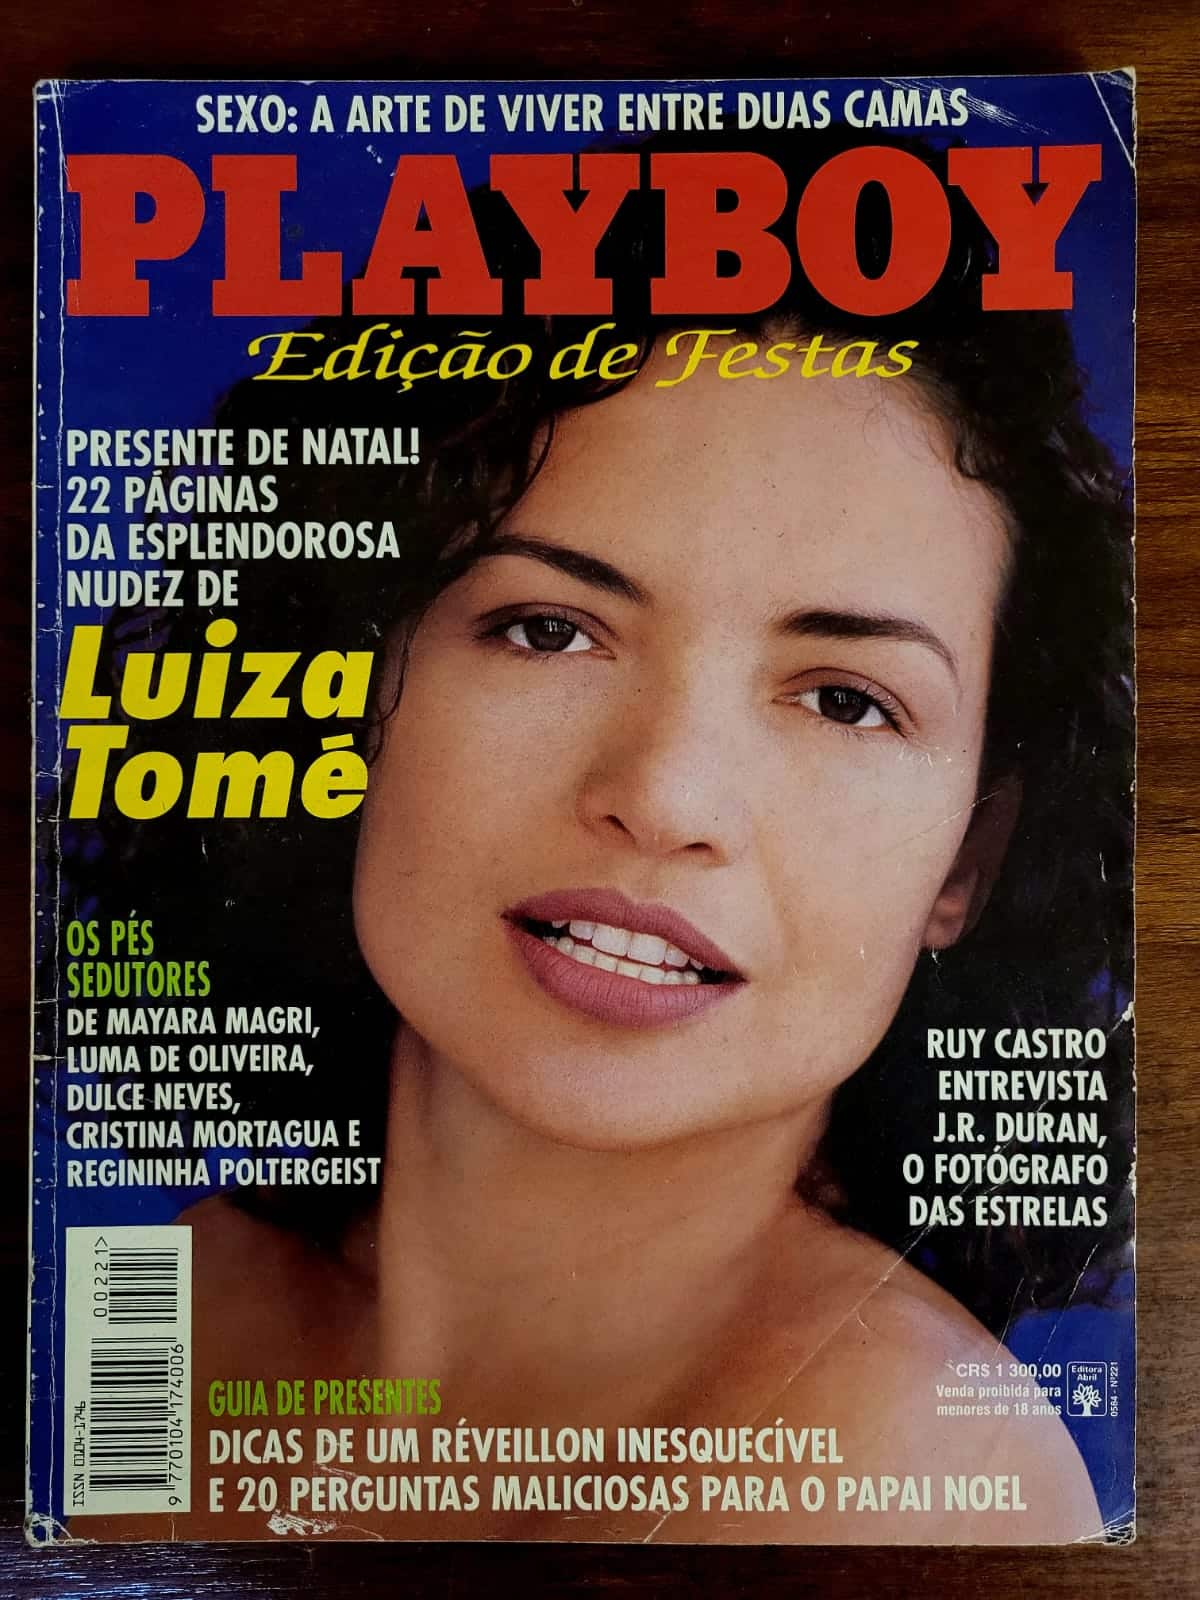 Playboy 221 Luiza Tome 1a Casa do Colecionador